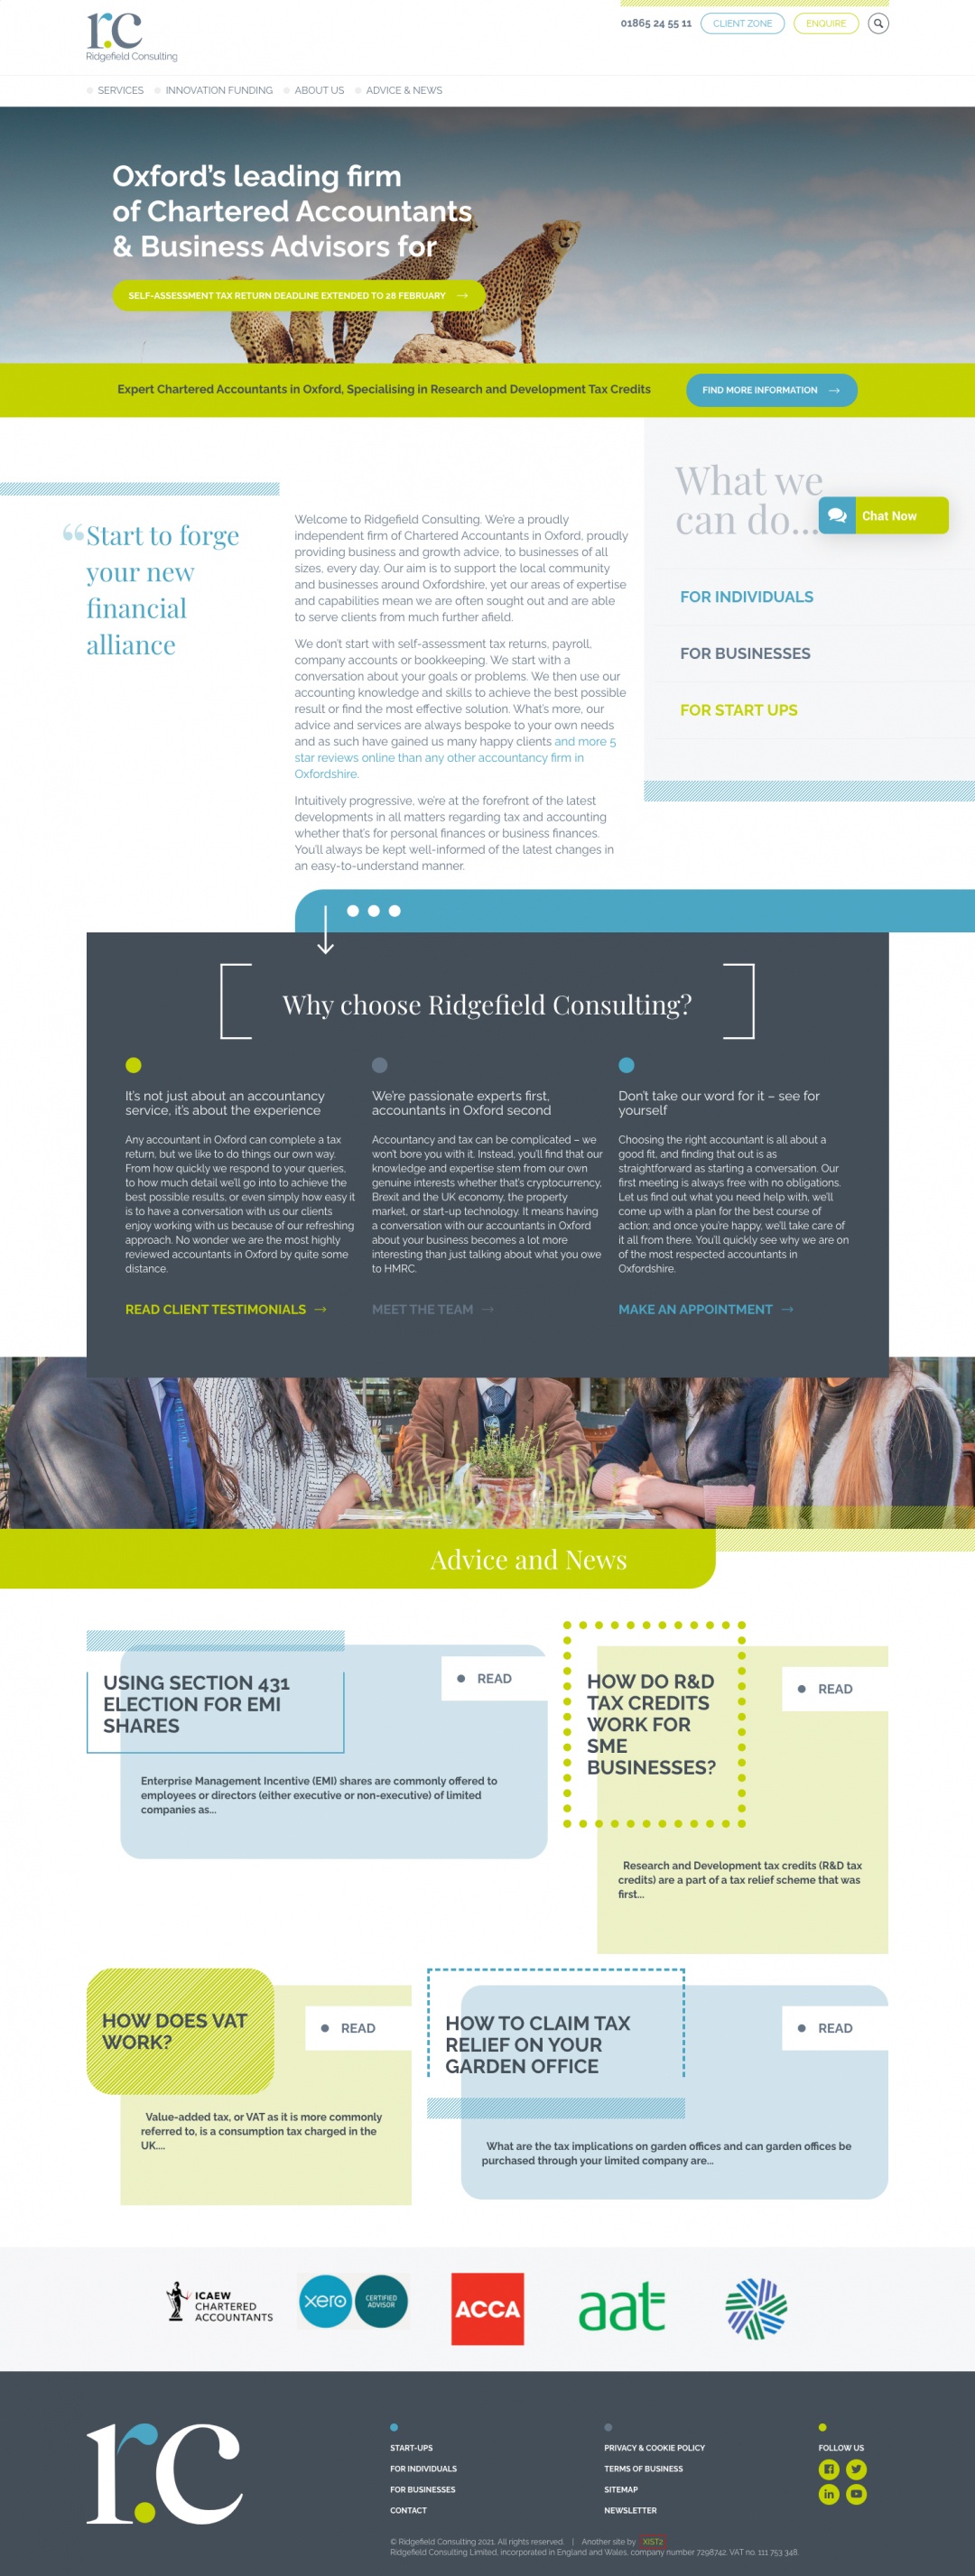 Ridgefield Consulting website homepage screenshot on desktop device